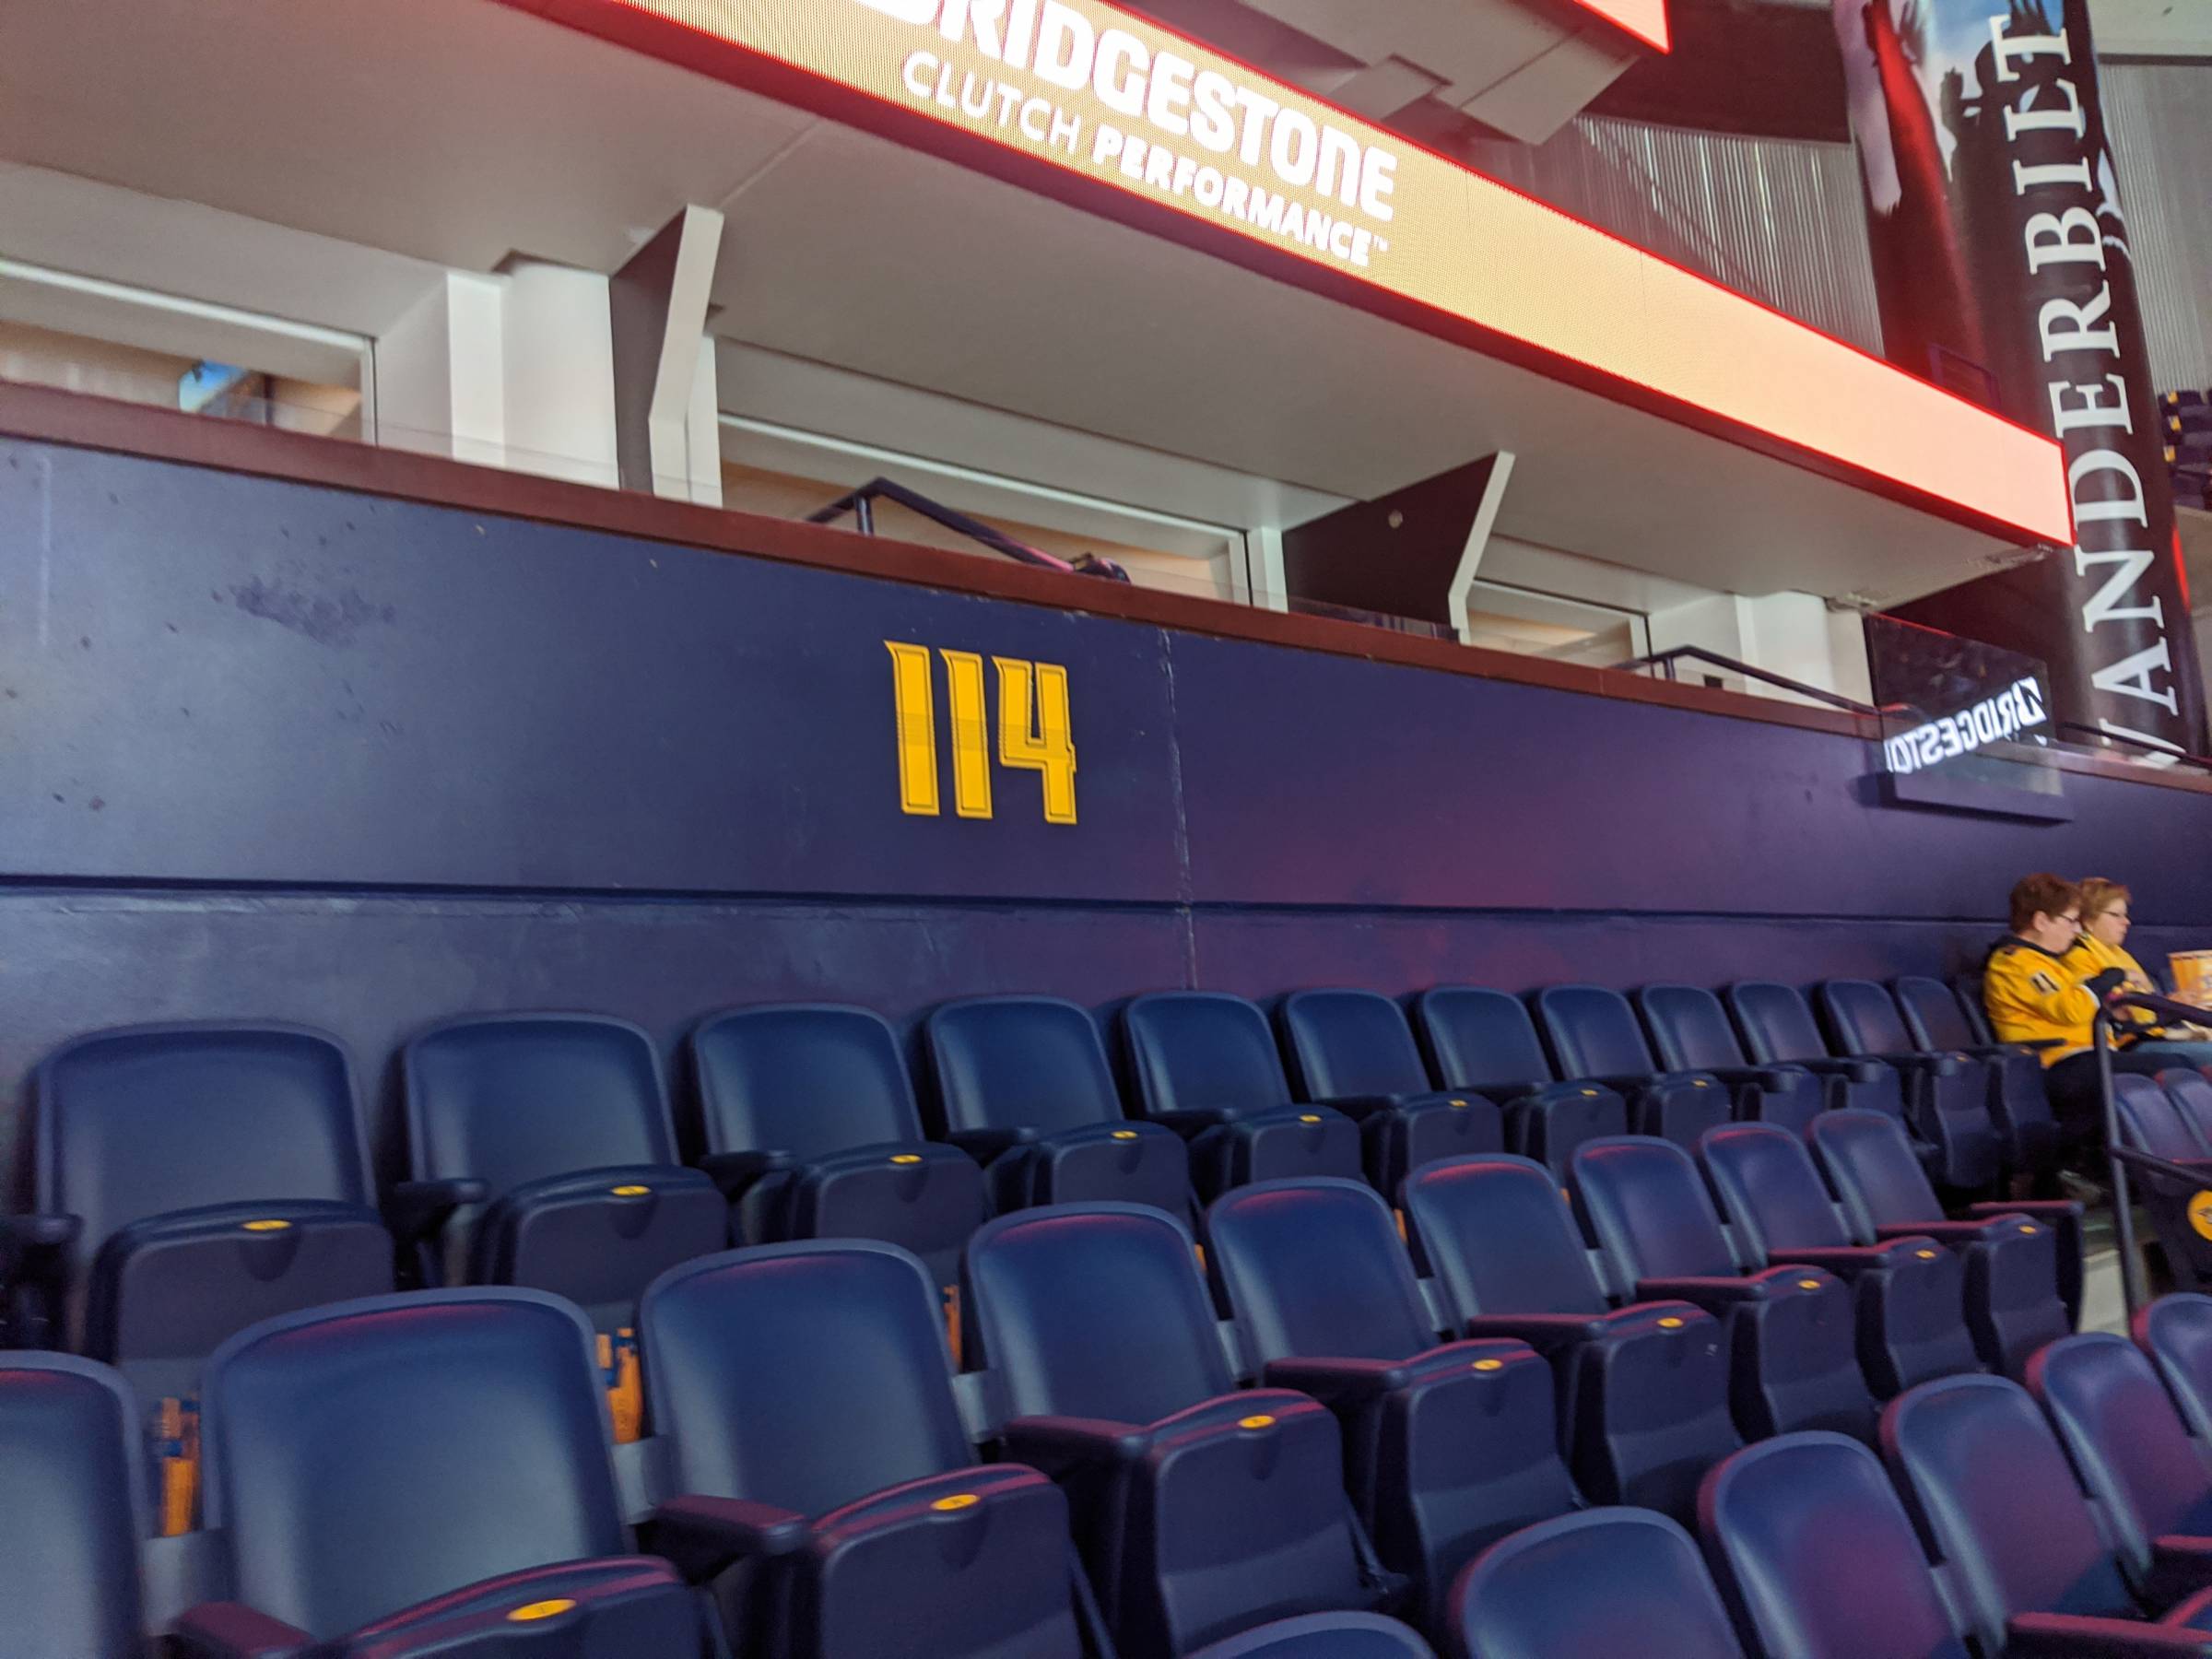 section 114 seating at Bridgestone Arena